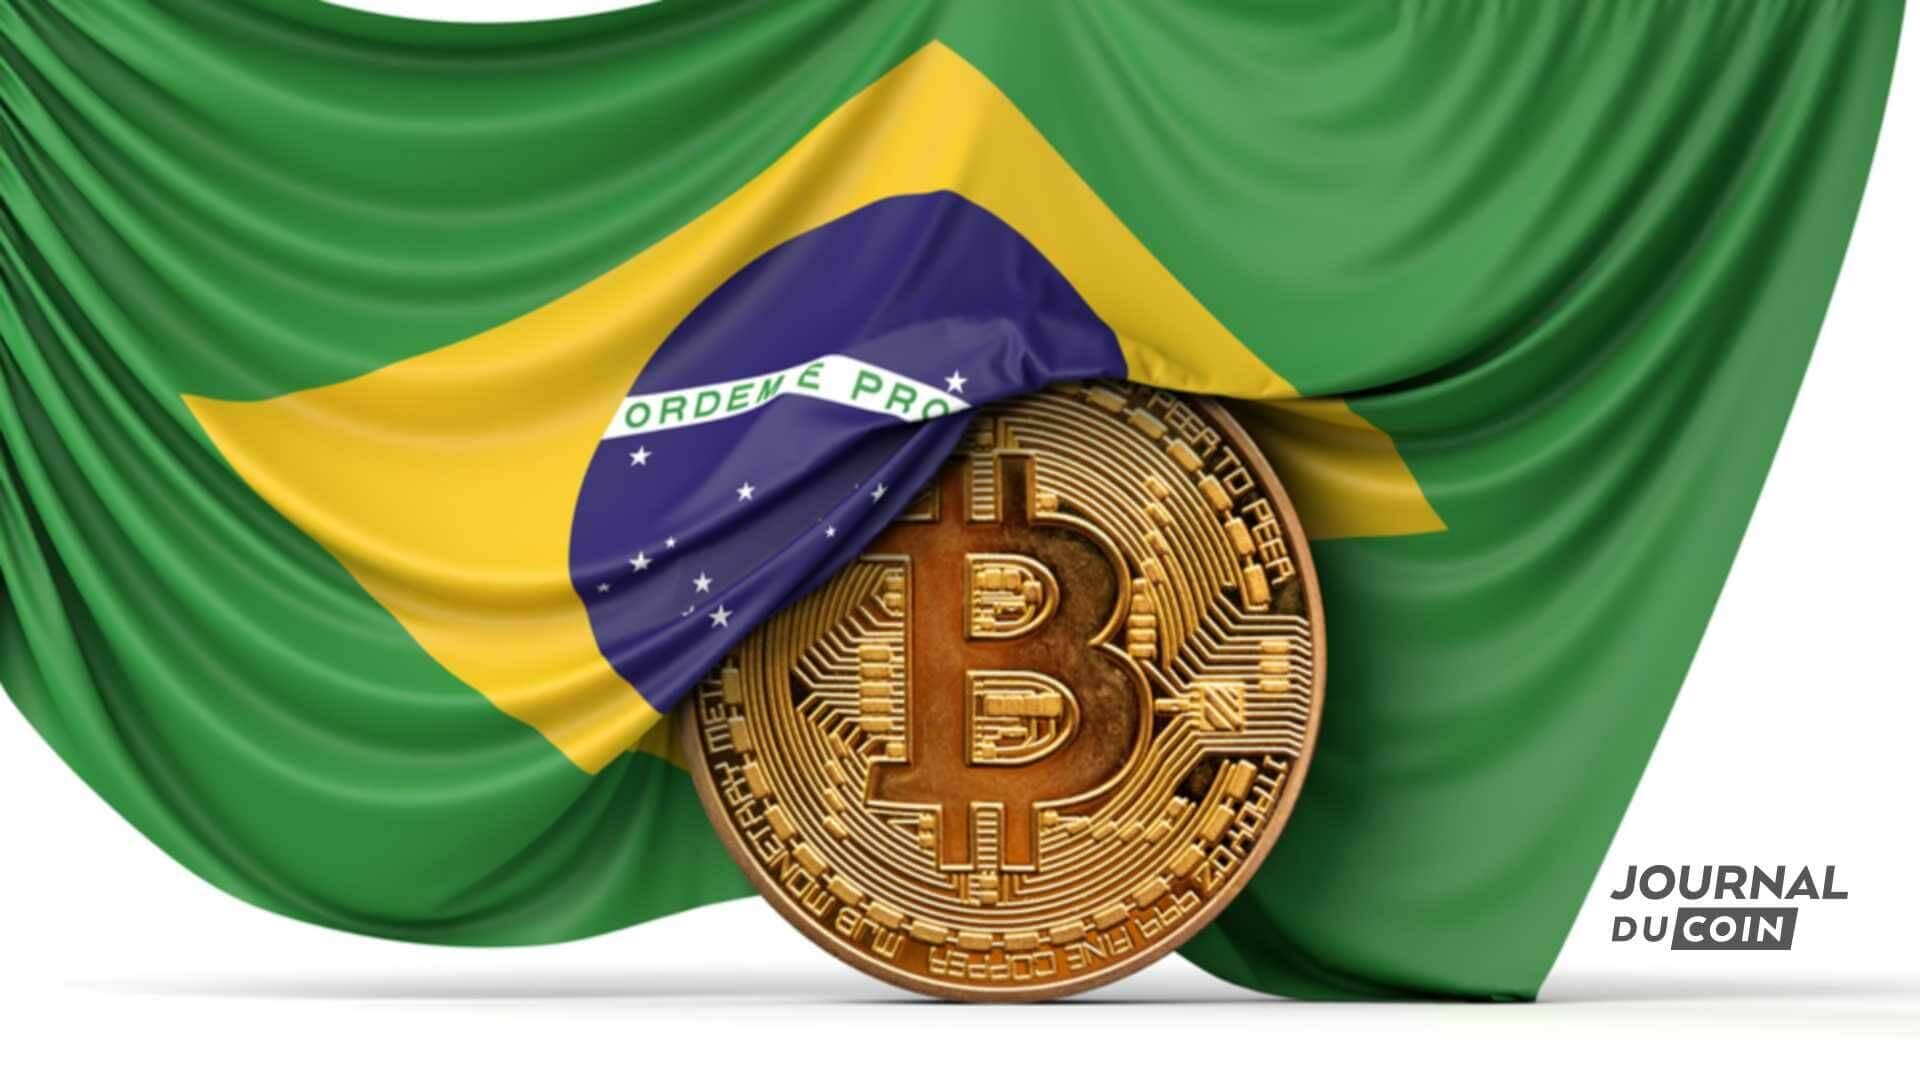 Bitcoin and the Brazilian flag: the future?